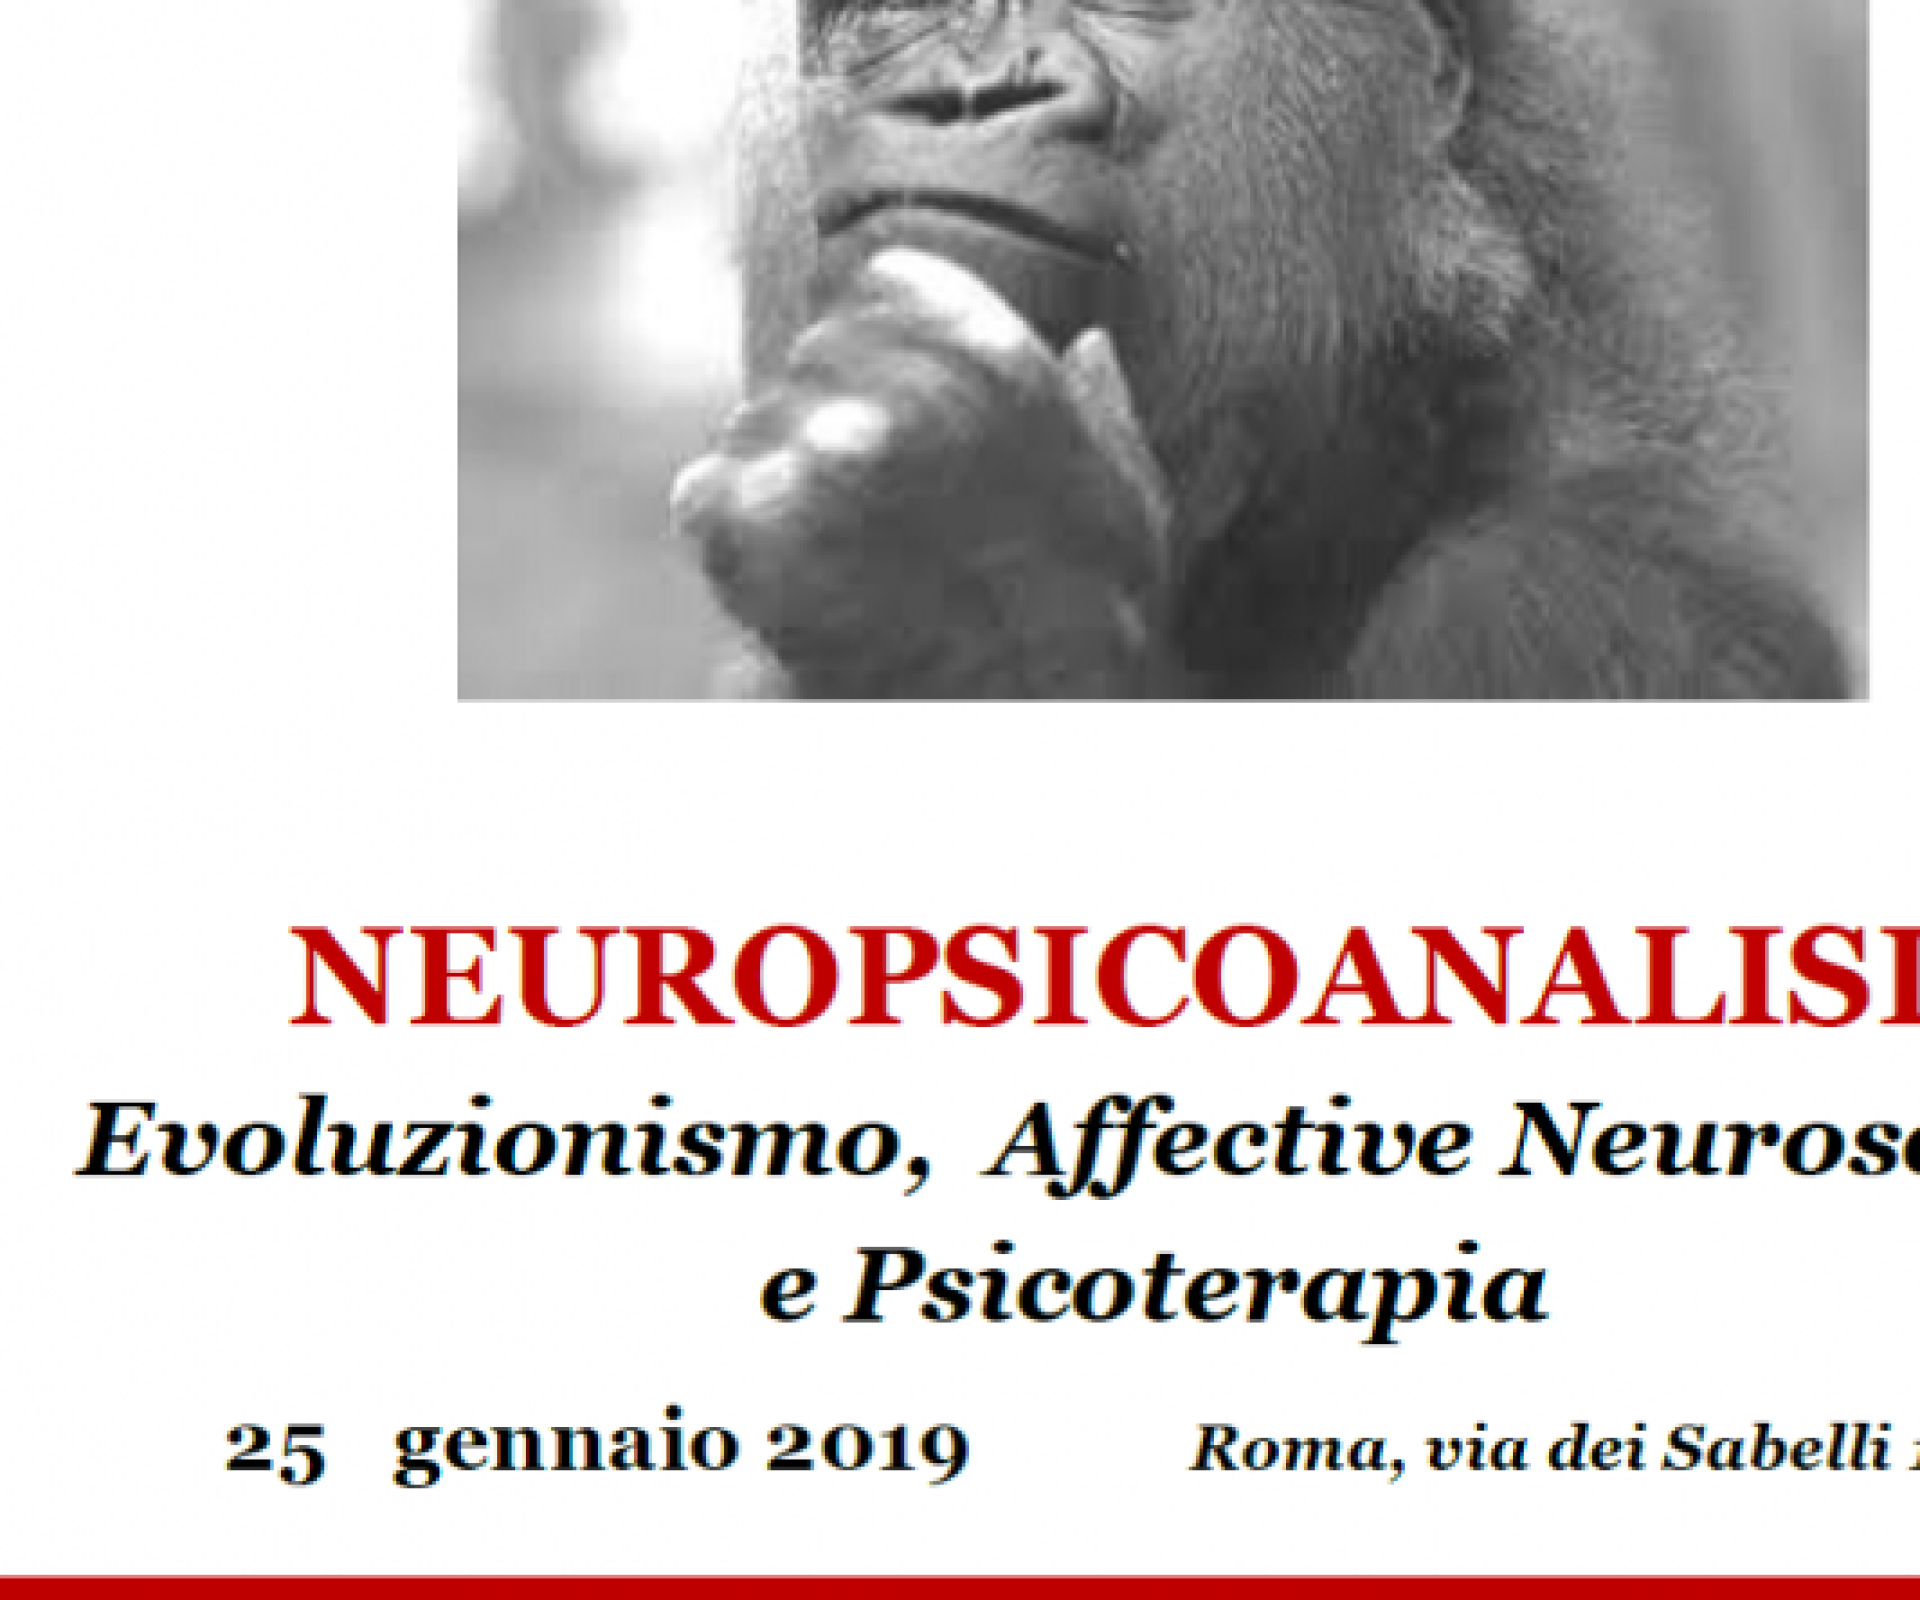 NEUROPSICOANALISI. Evoluzionismo, Affective Neuroscience